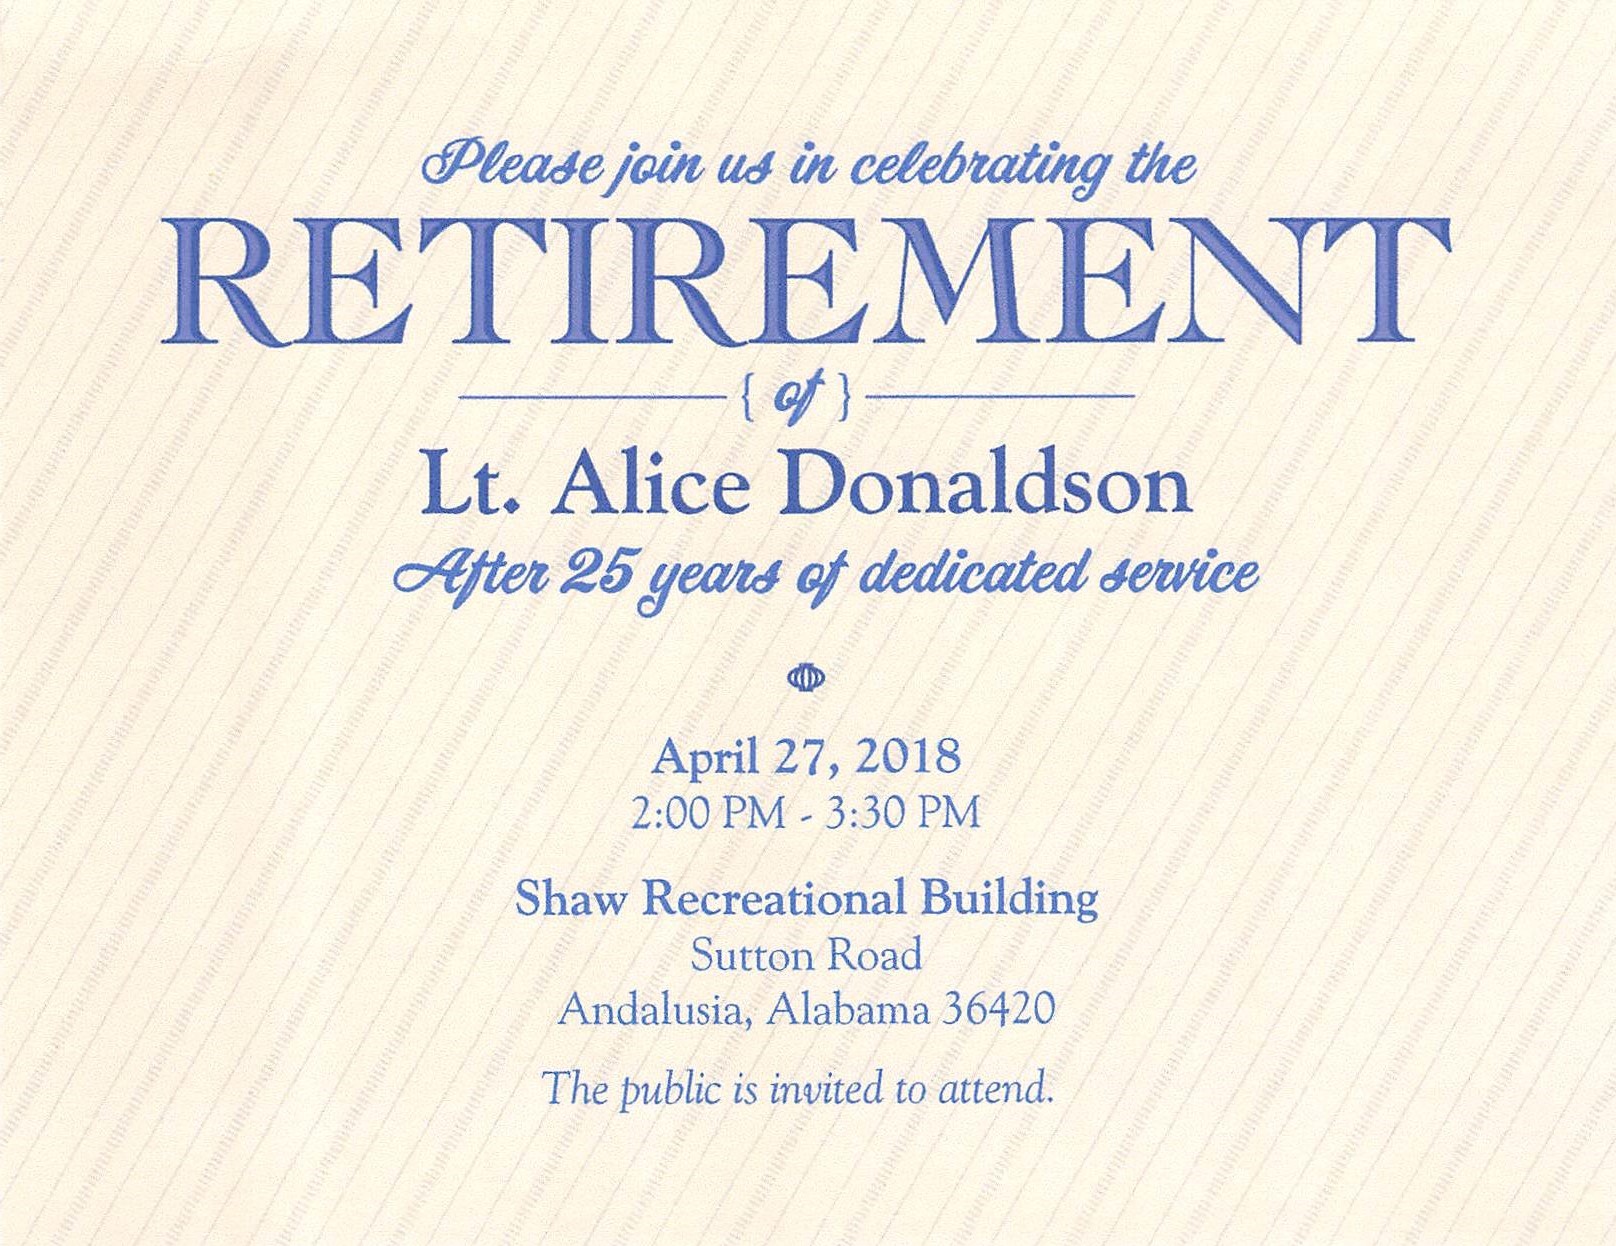 Retirement Lt. Alice Donaldson